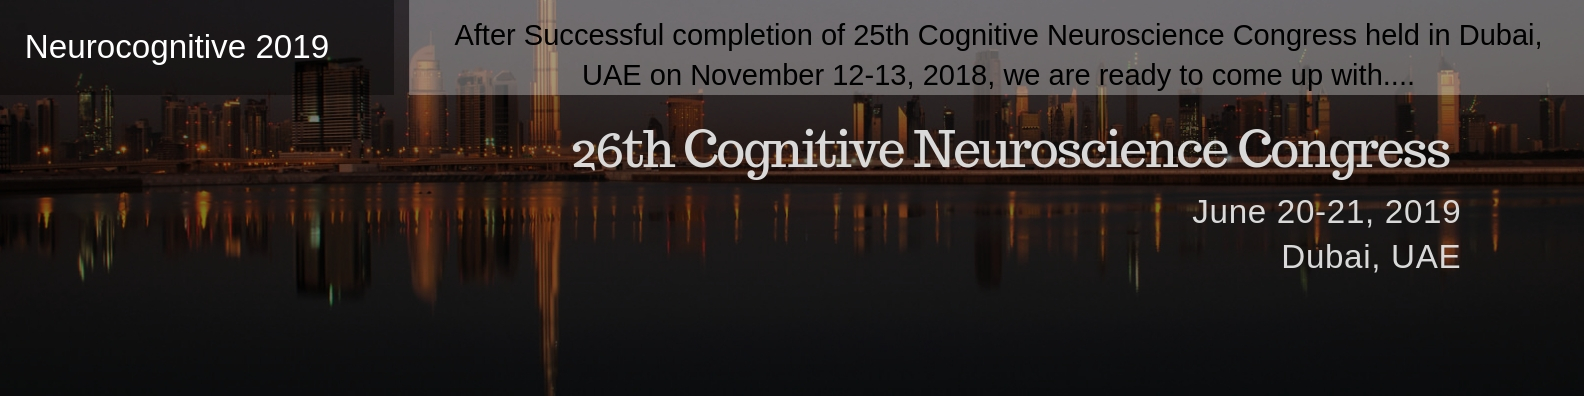 26th Cognitive Neuroscience Congress, Dubai, United Arab Emirates